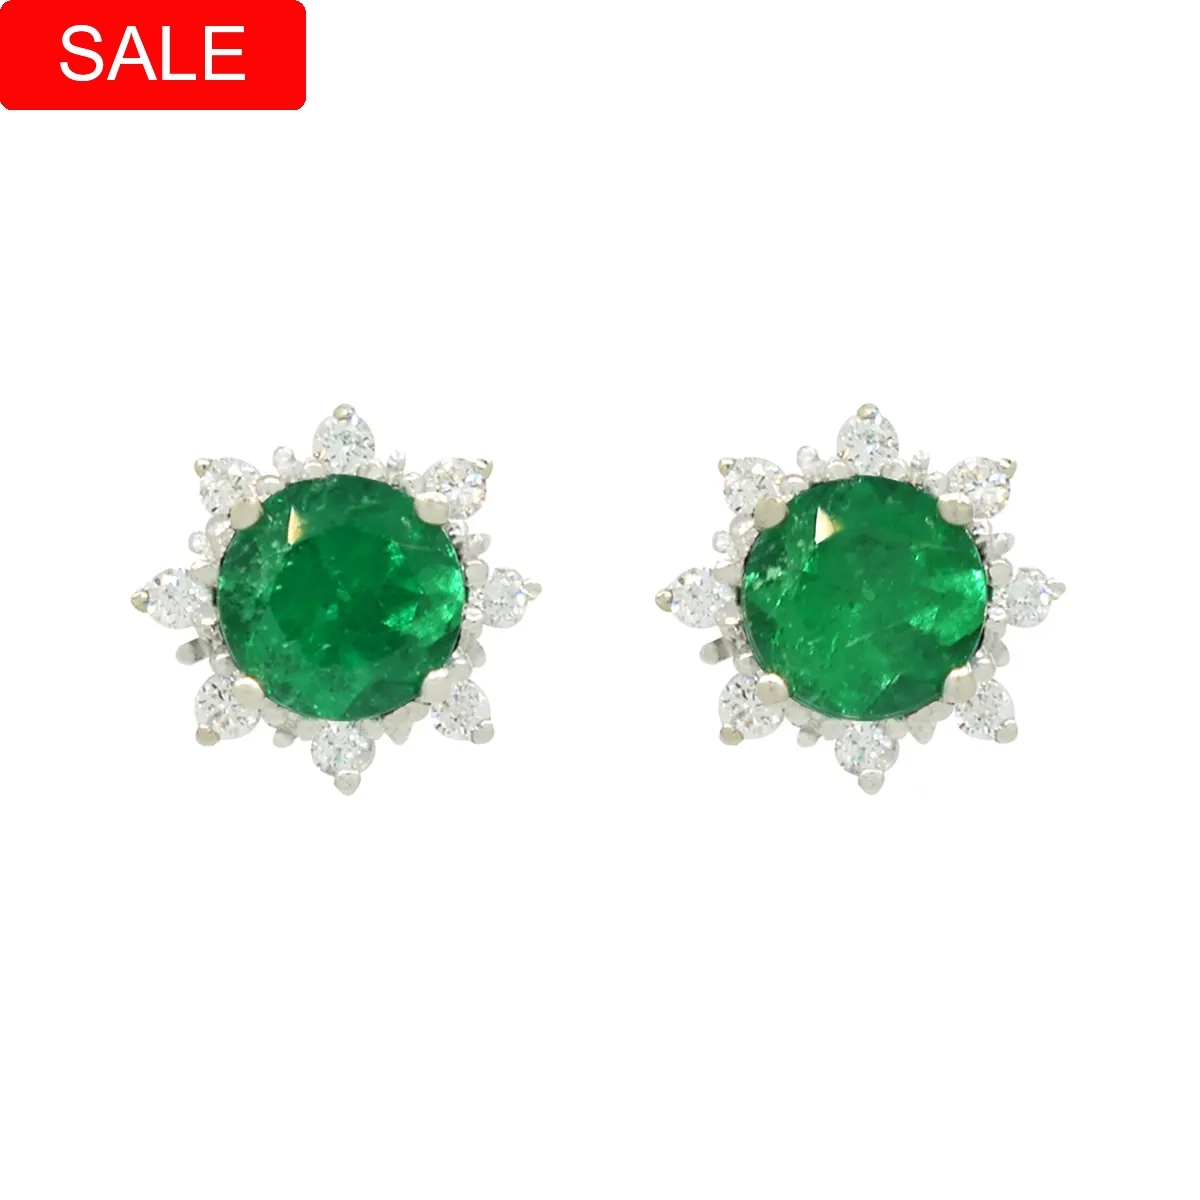 Emerald and Diamond Stud Earrings in 18K White Gold Dark Green Emeralds and Diamond Halo